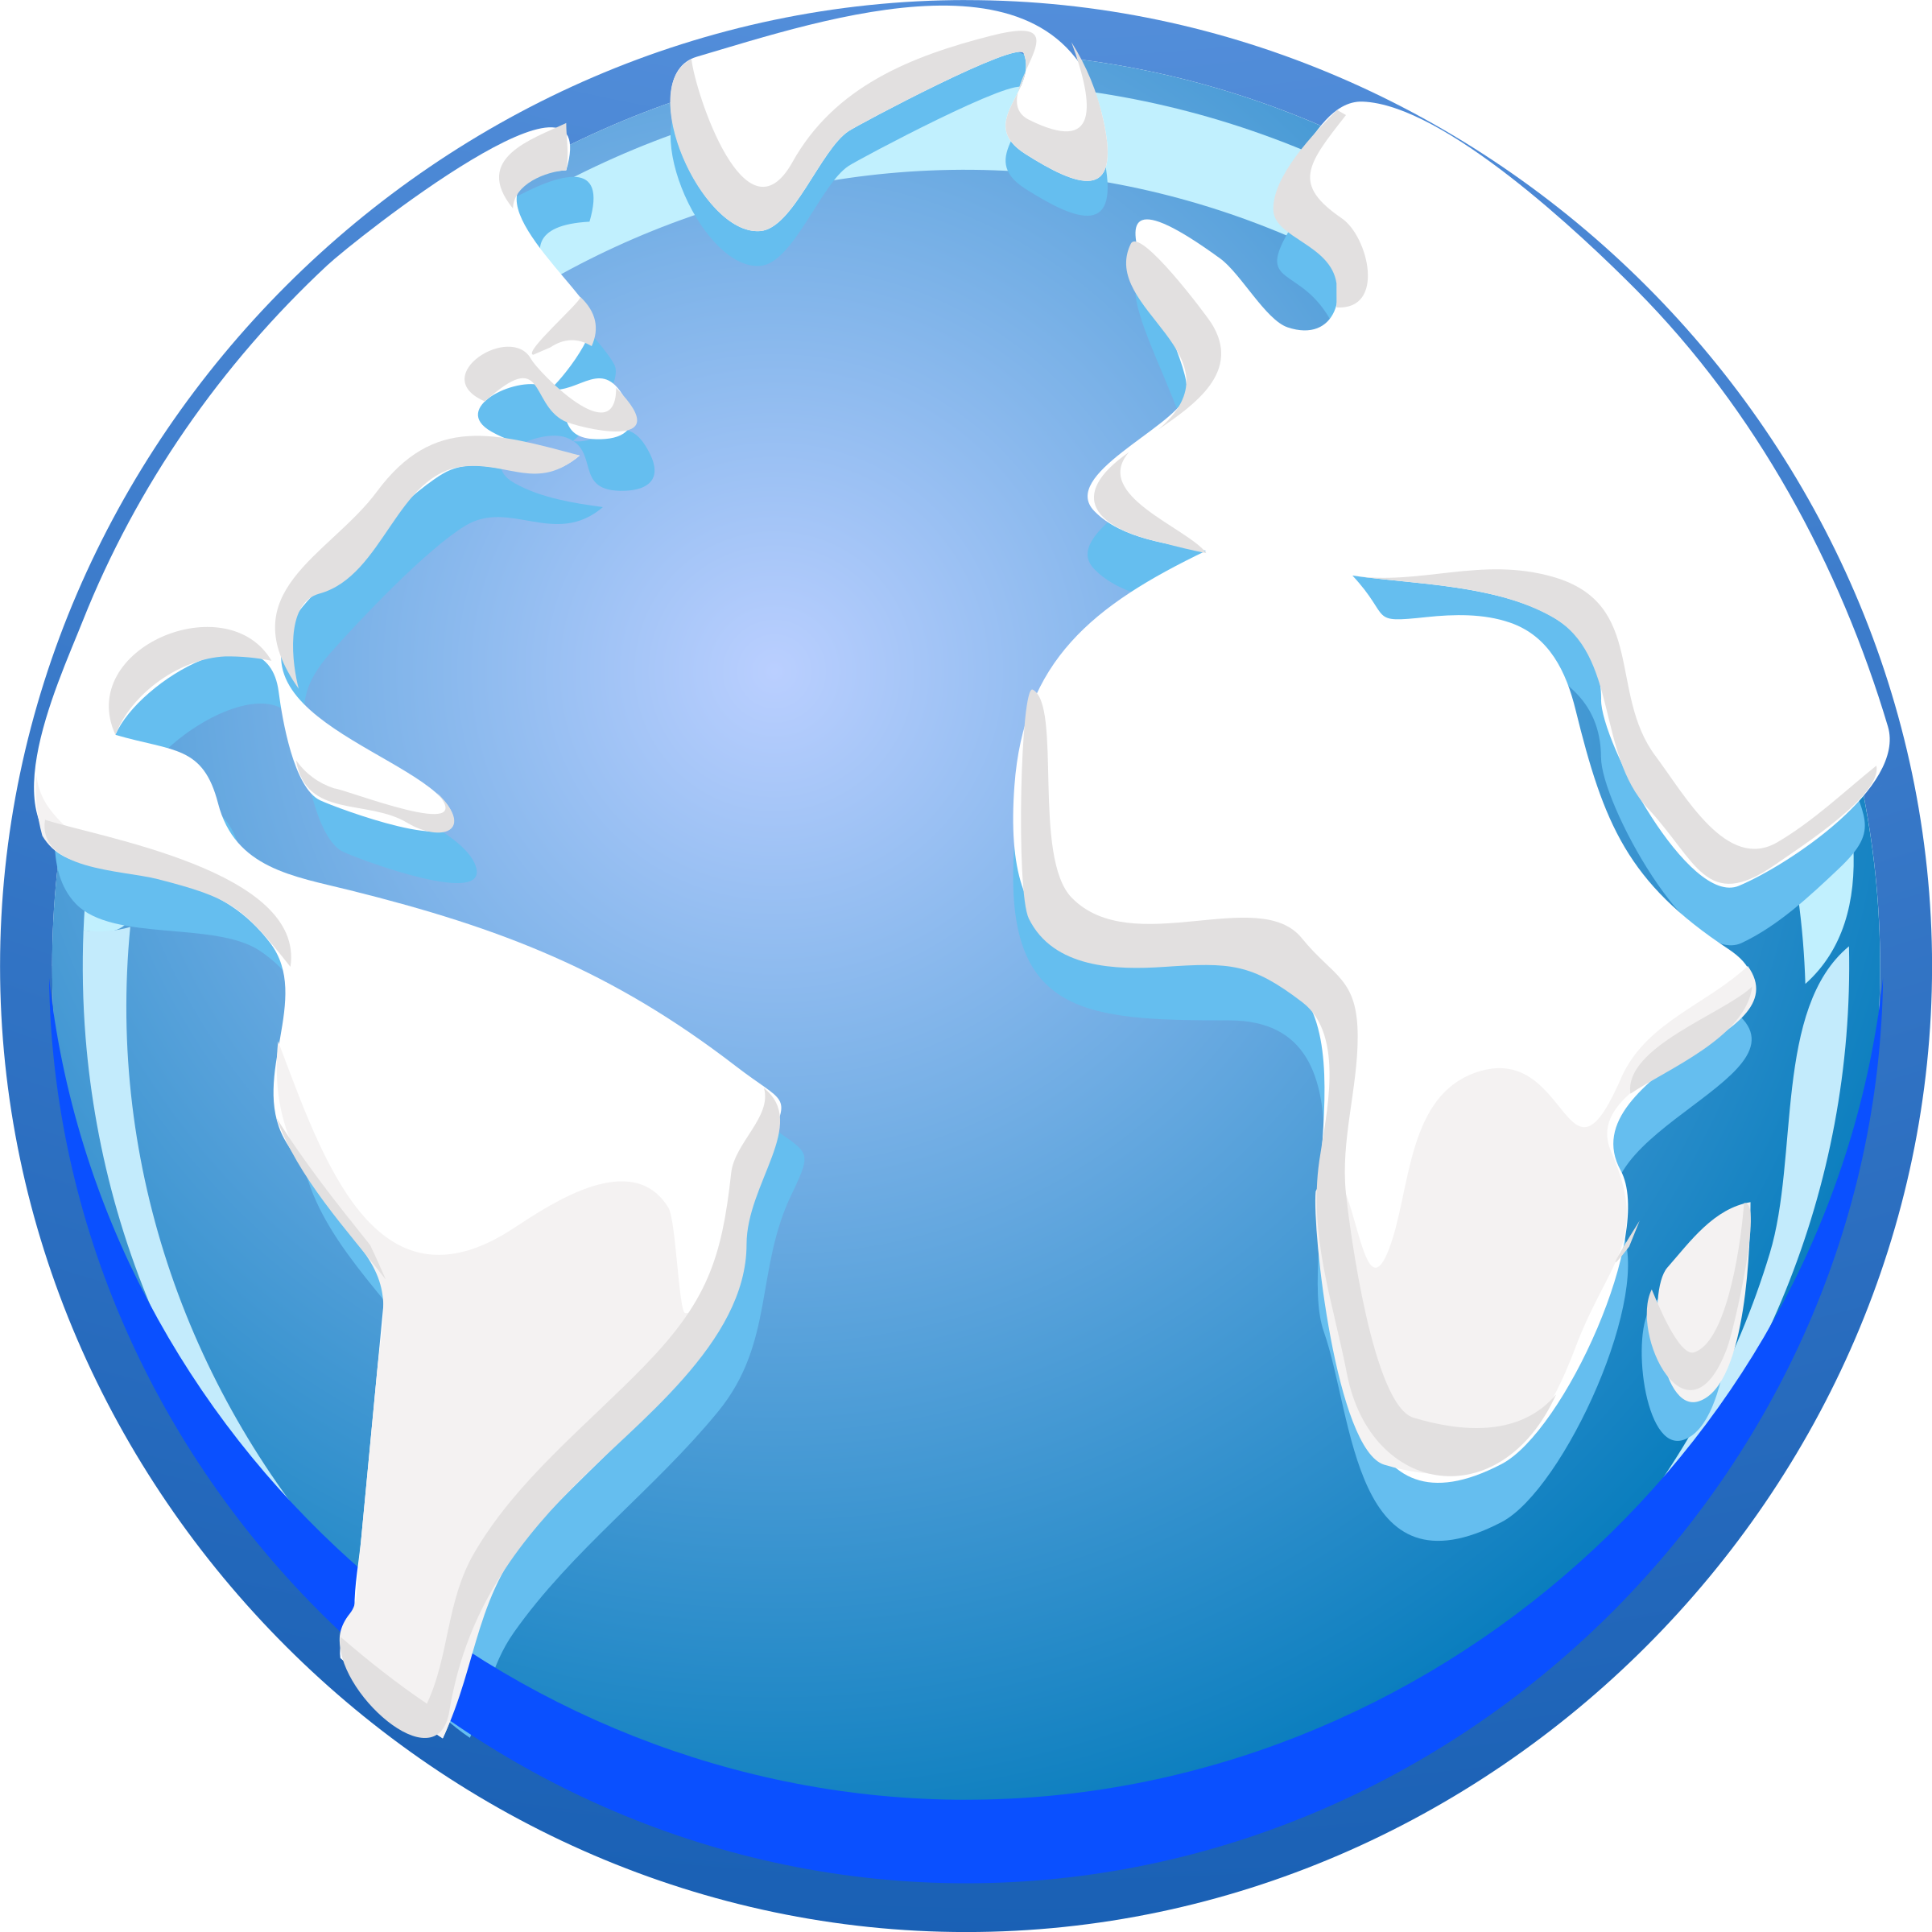 World icon. Земной шар. Планета земля эмблема. Логотип в виде земного шара. Планета земля логотип.